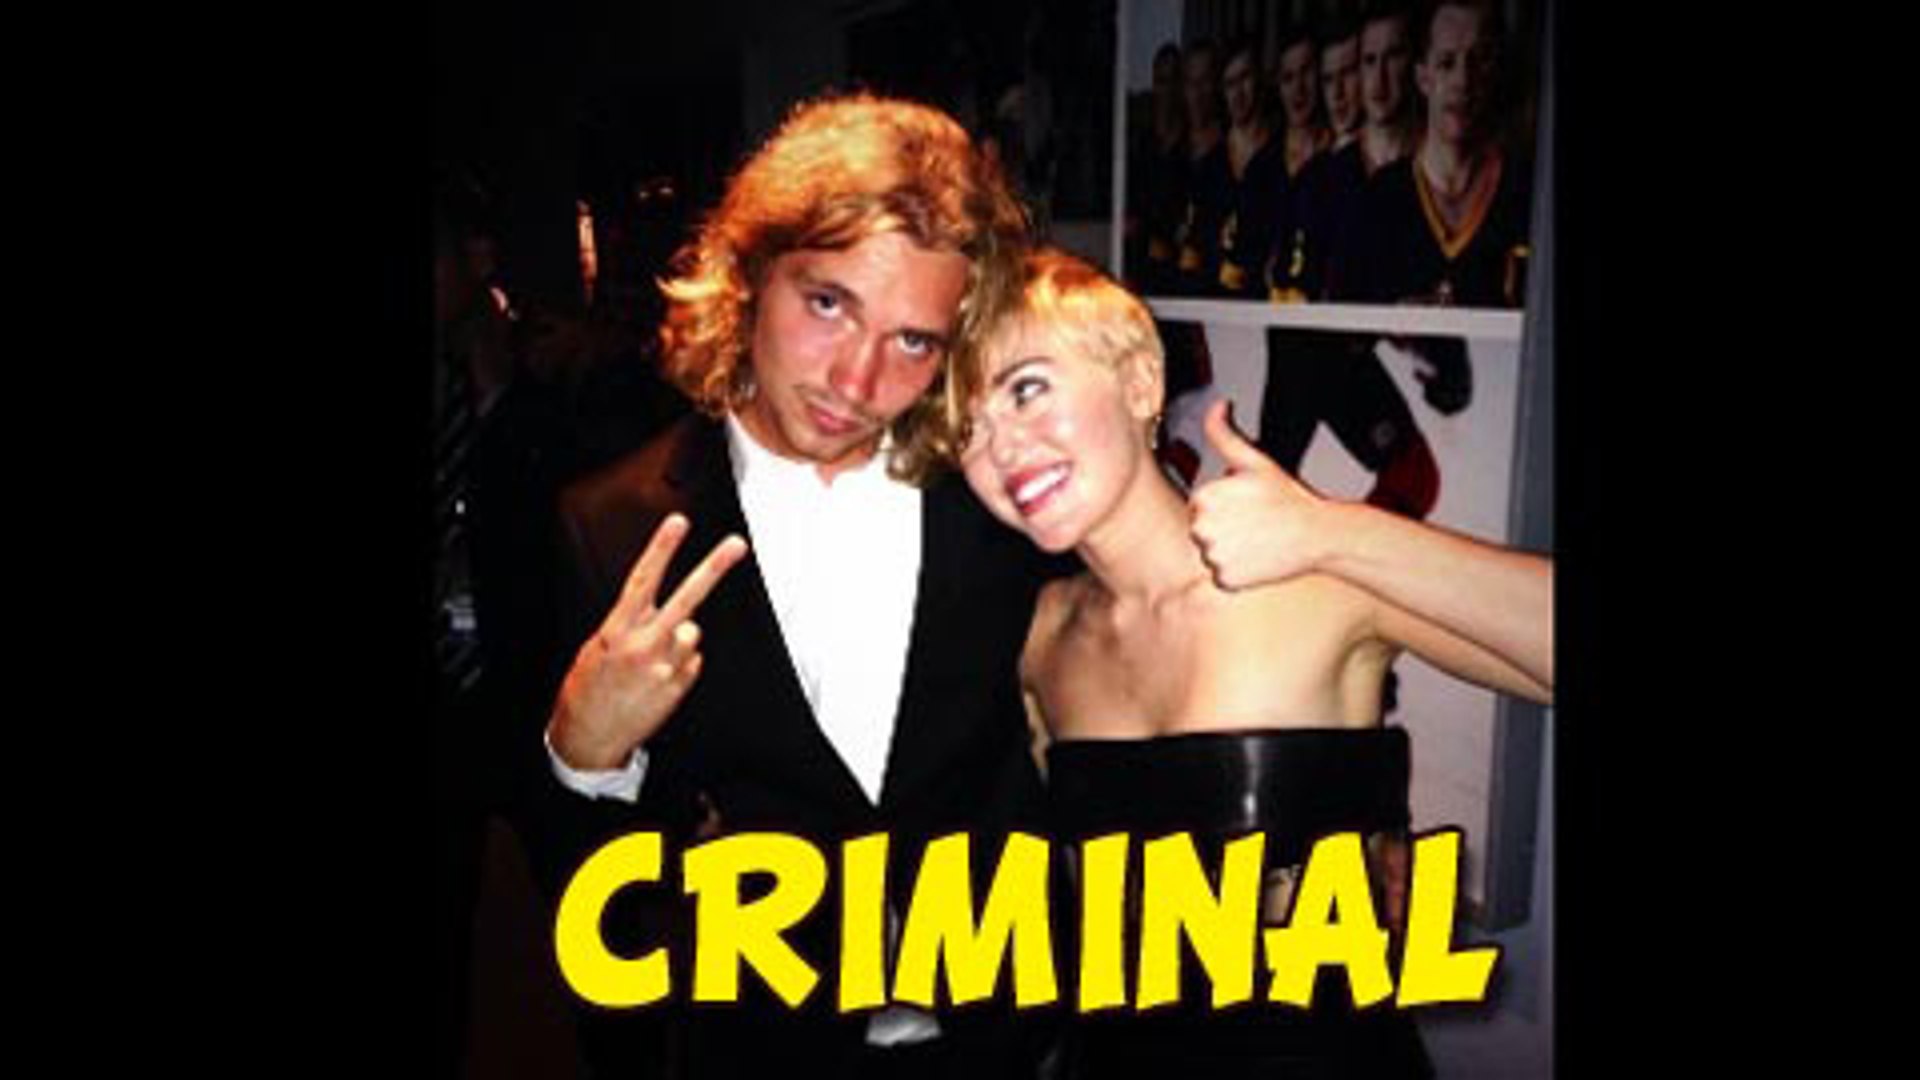 MILEY CYRUS VMA DATE HAS CRIMINAL RECORD!